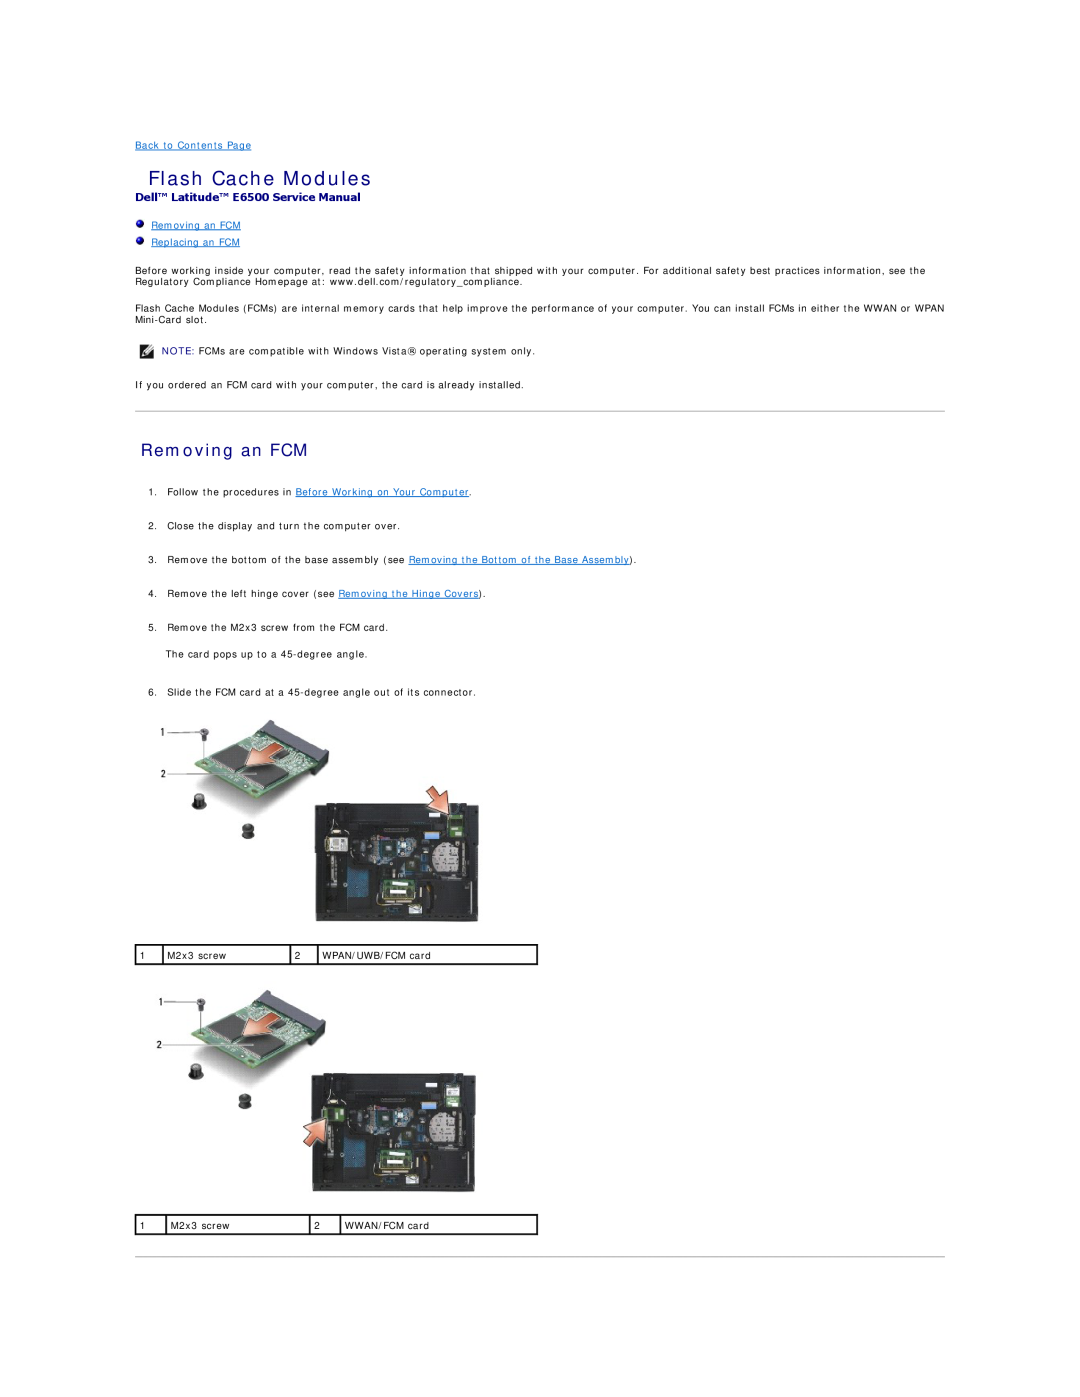 Dell manual Flash Cache Modules, Removing an FCM Replacing an FCM, Dell Latitude E6500 Service Manual 